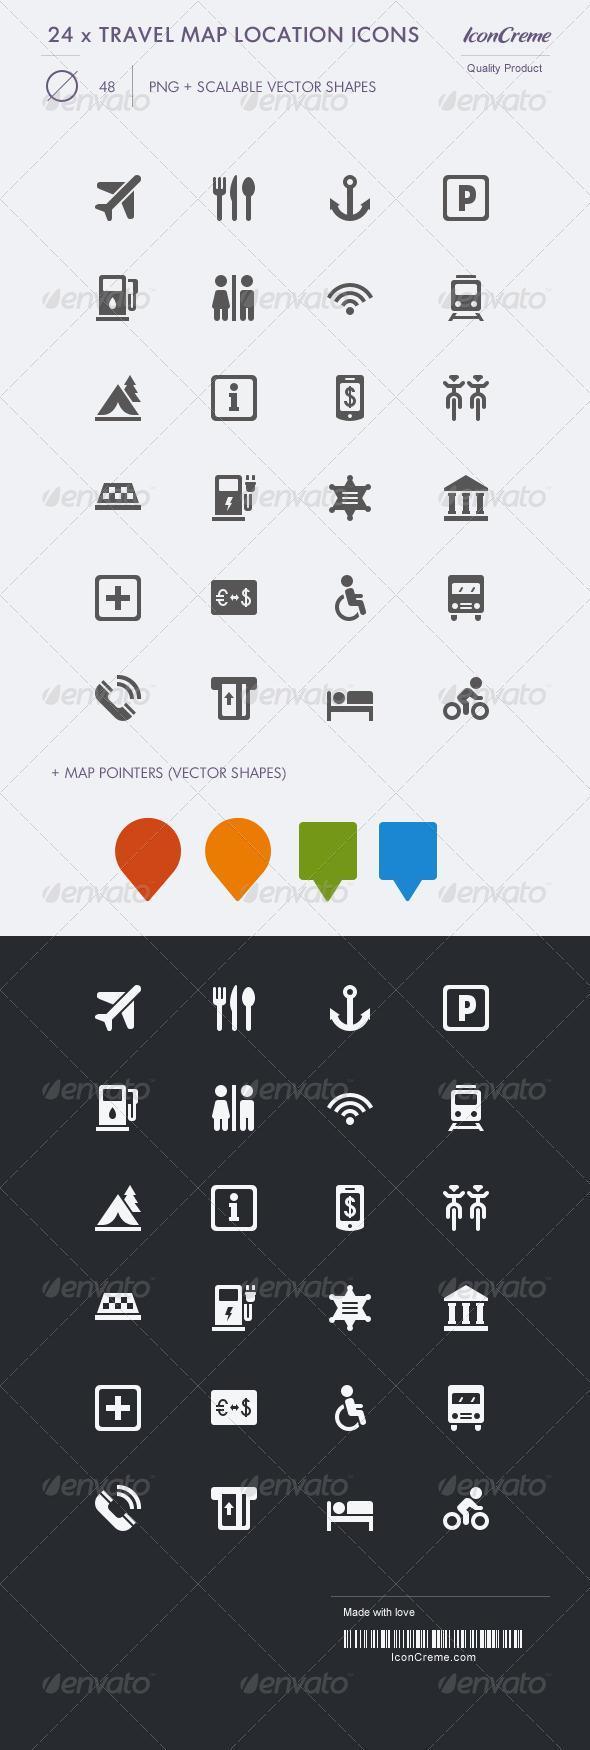 Travel Map Pin Icons Premium